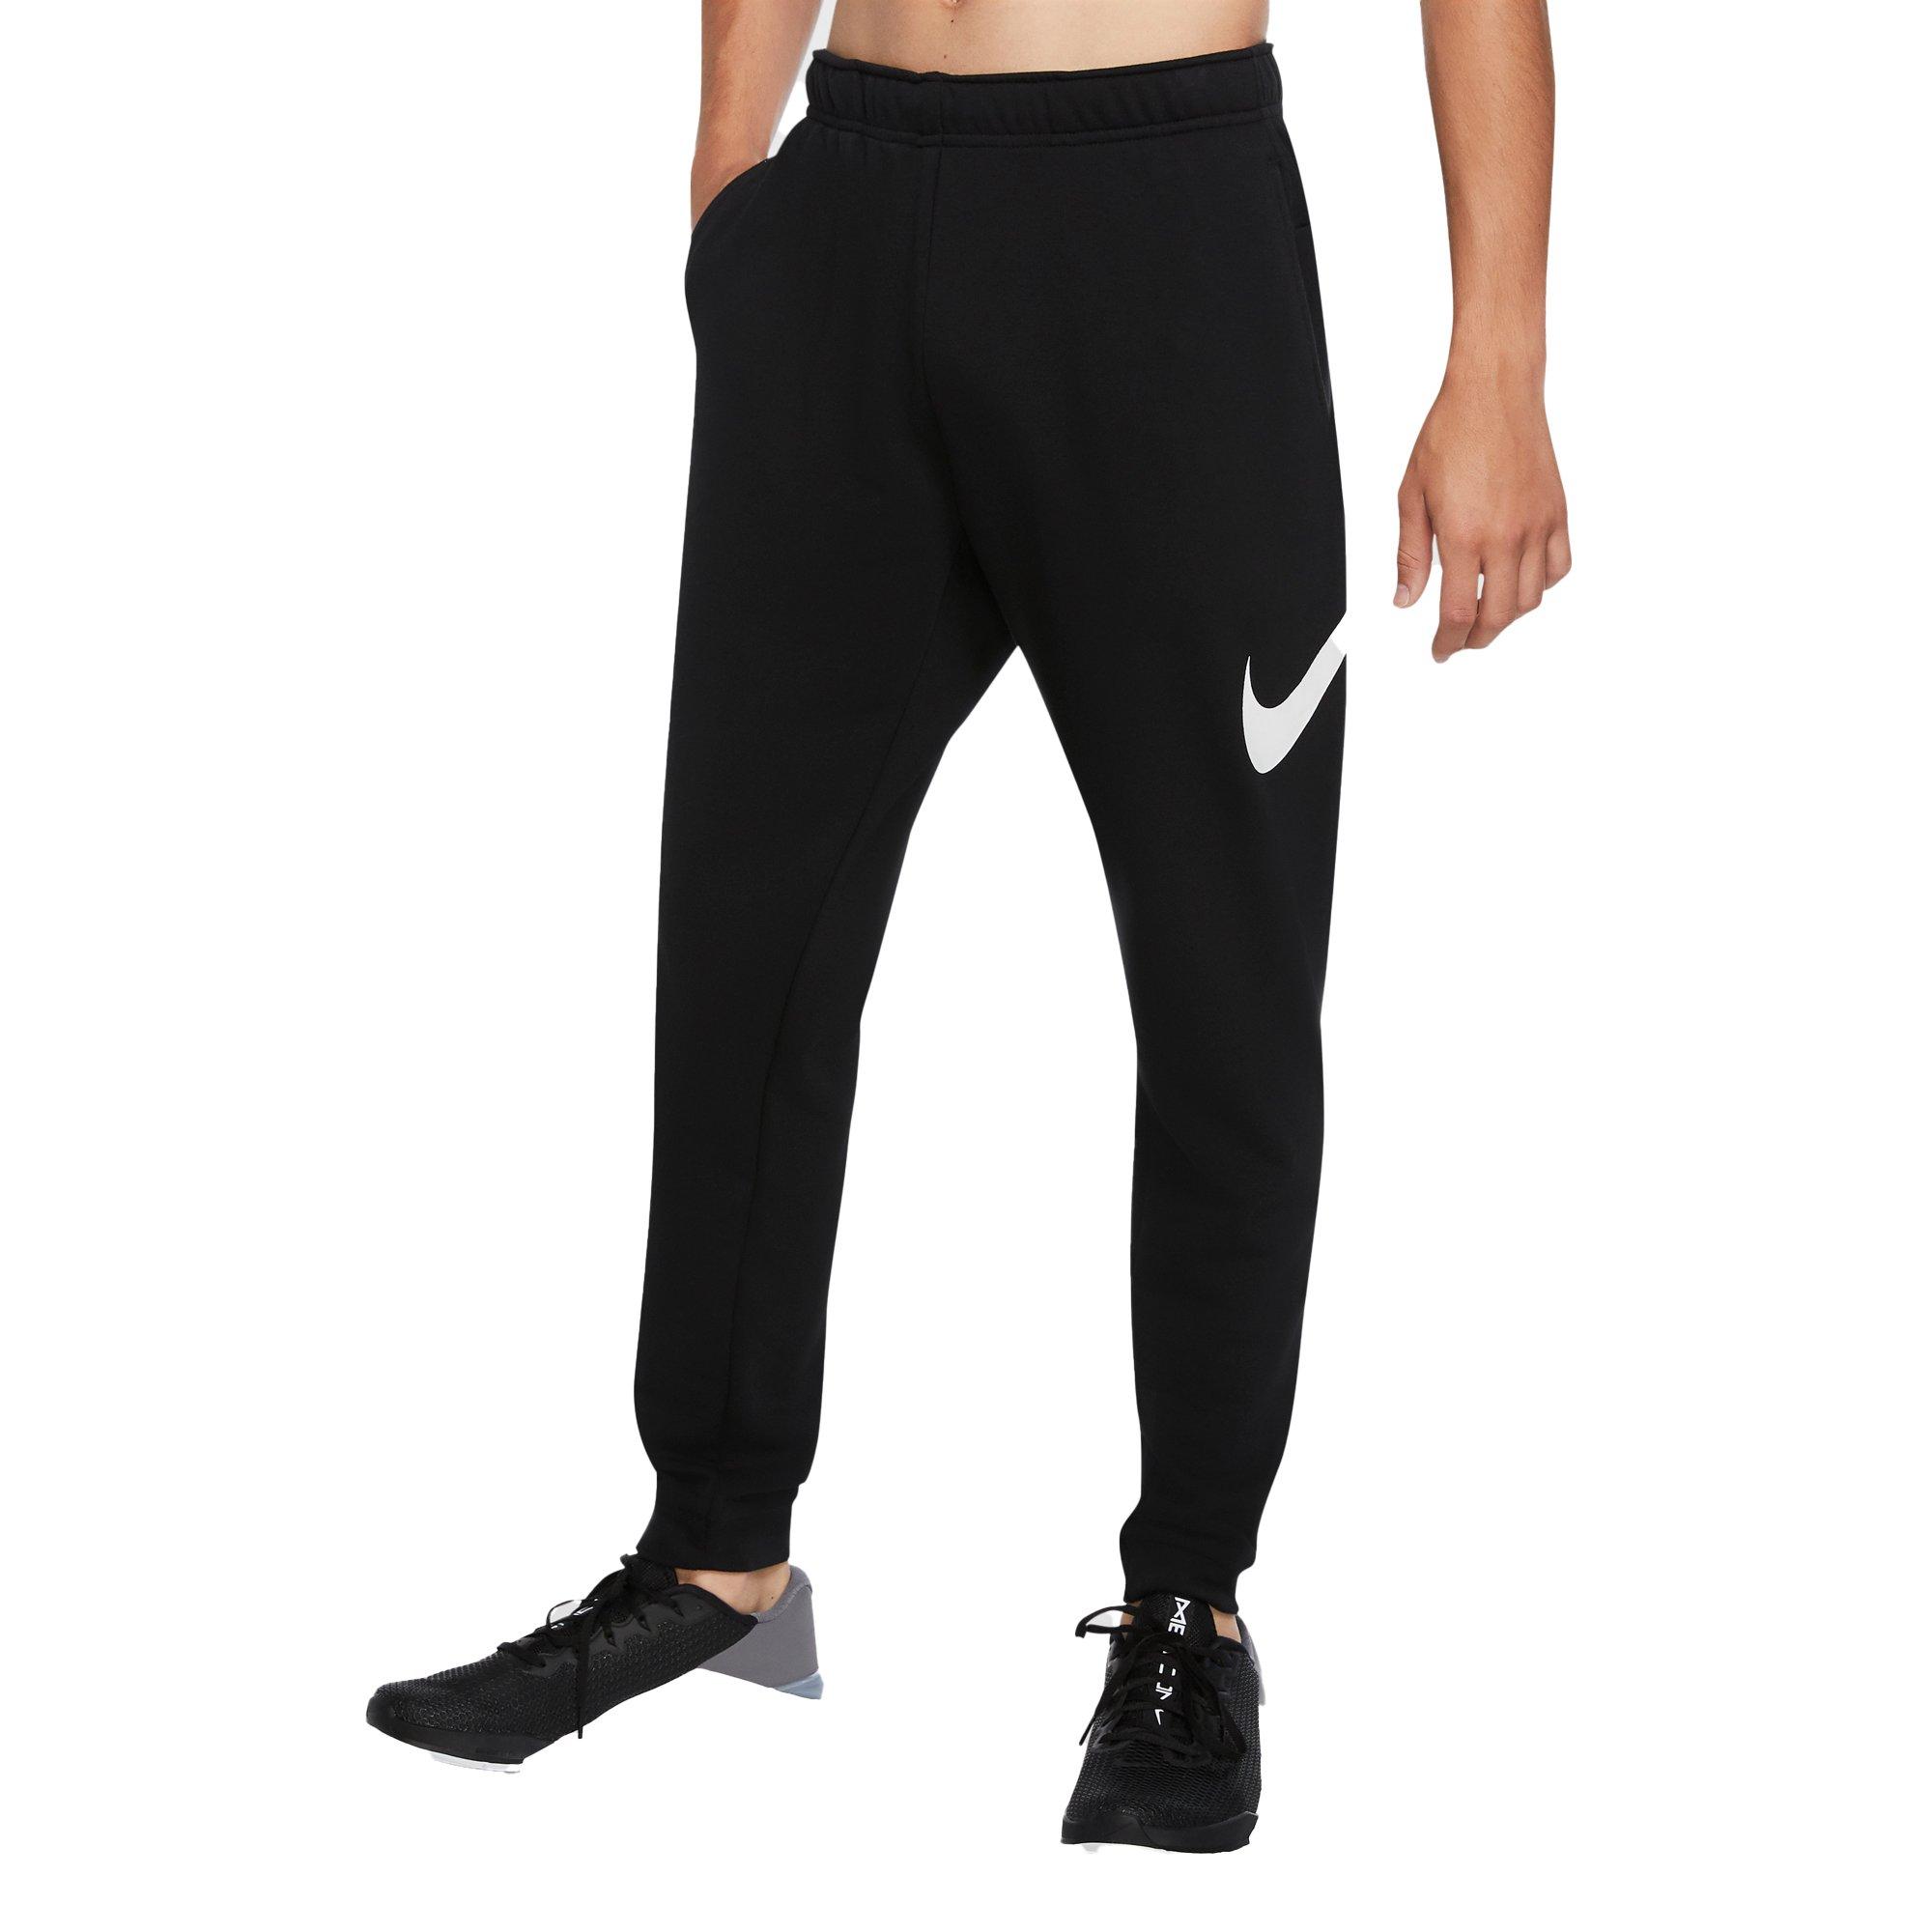 Frustratie Oproepen Ondergedompeld Nike Men's Dri-FIT Tapered Training Pants